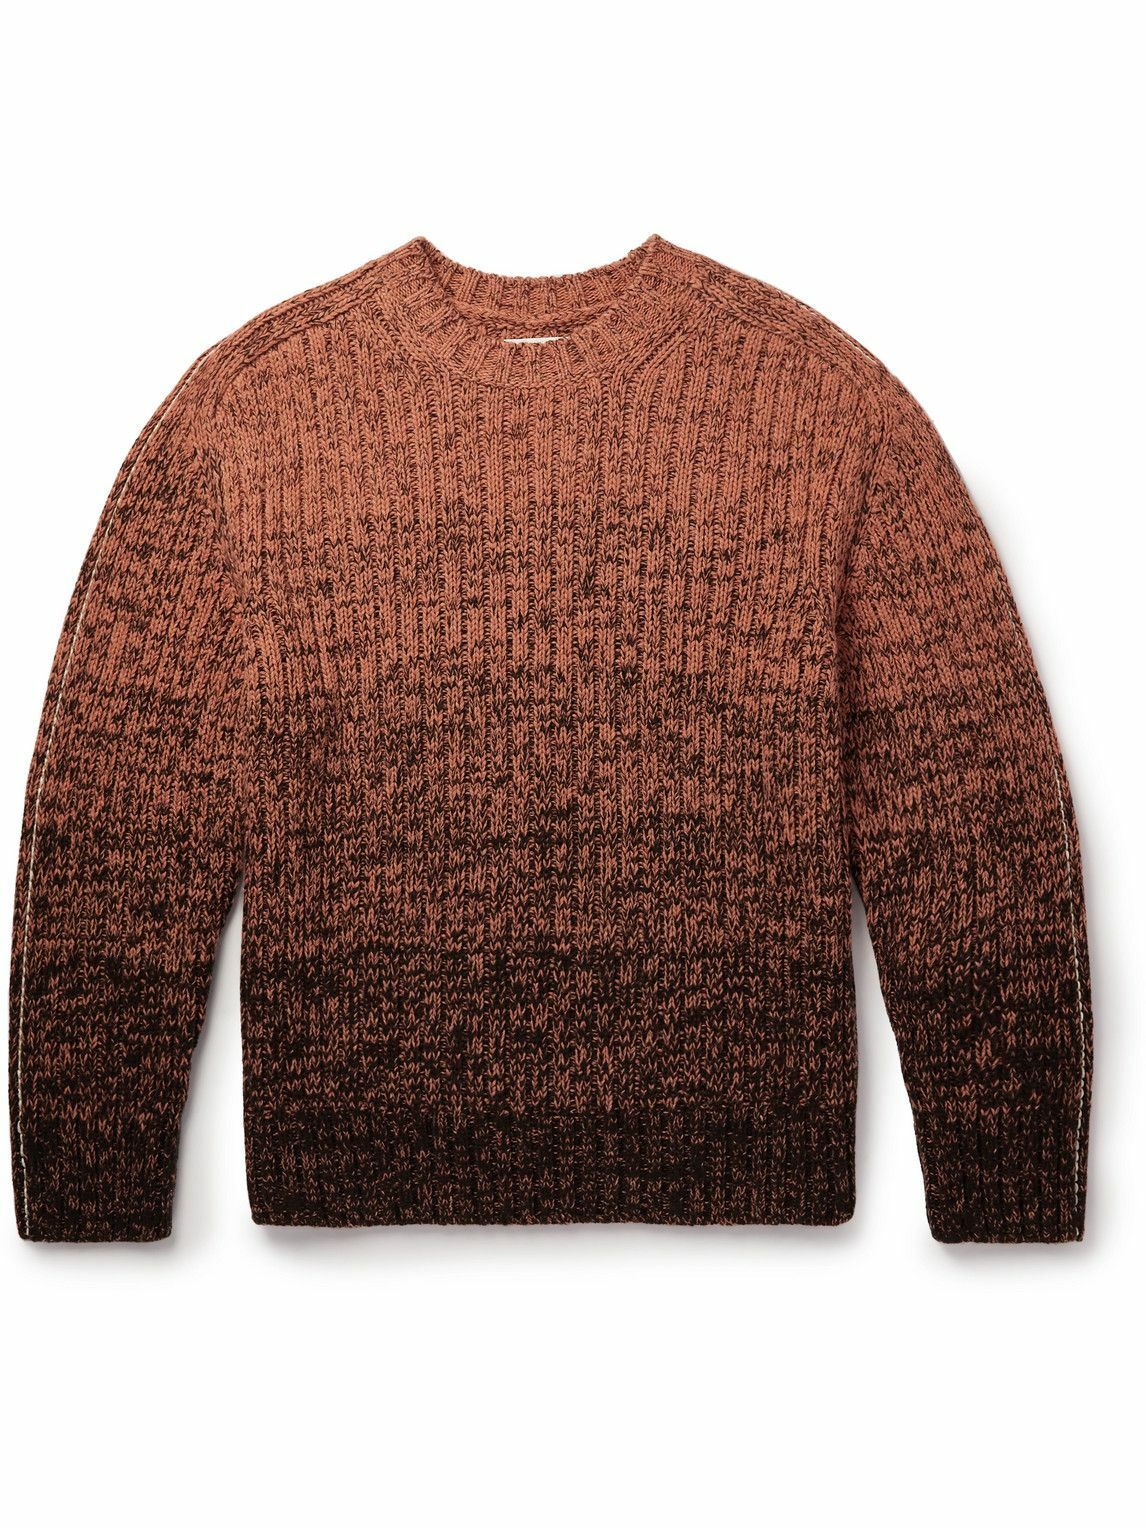 Photo: Mr P. - Dégradé Crocheted Cashmere and Wool-Blend Sweater - Orange